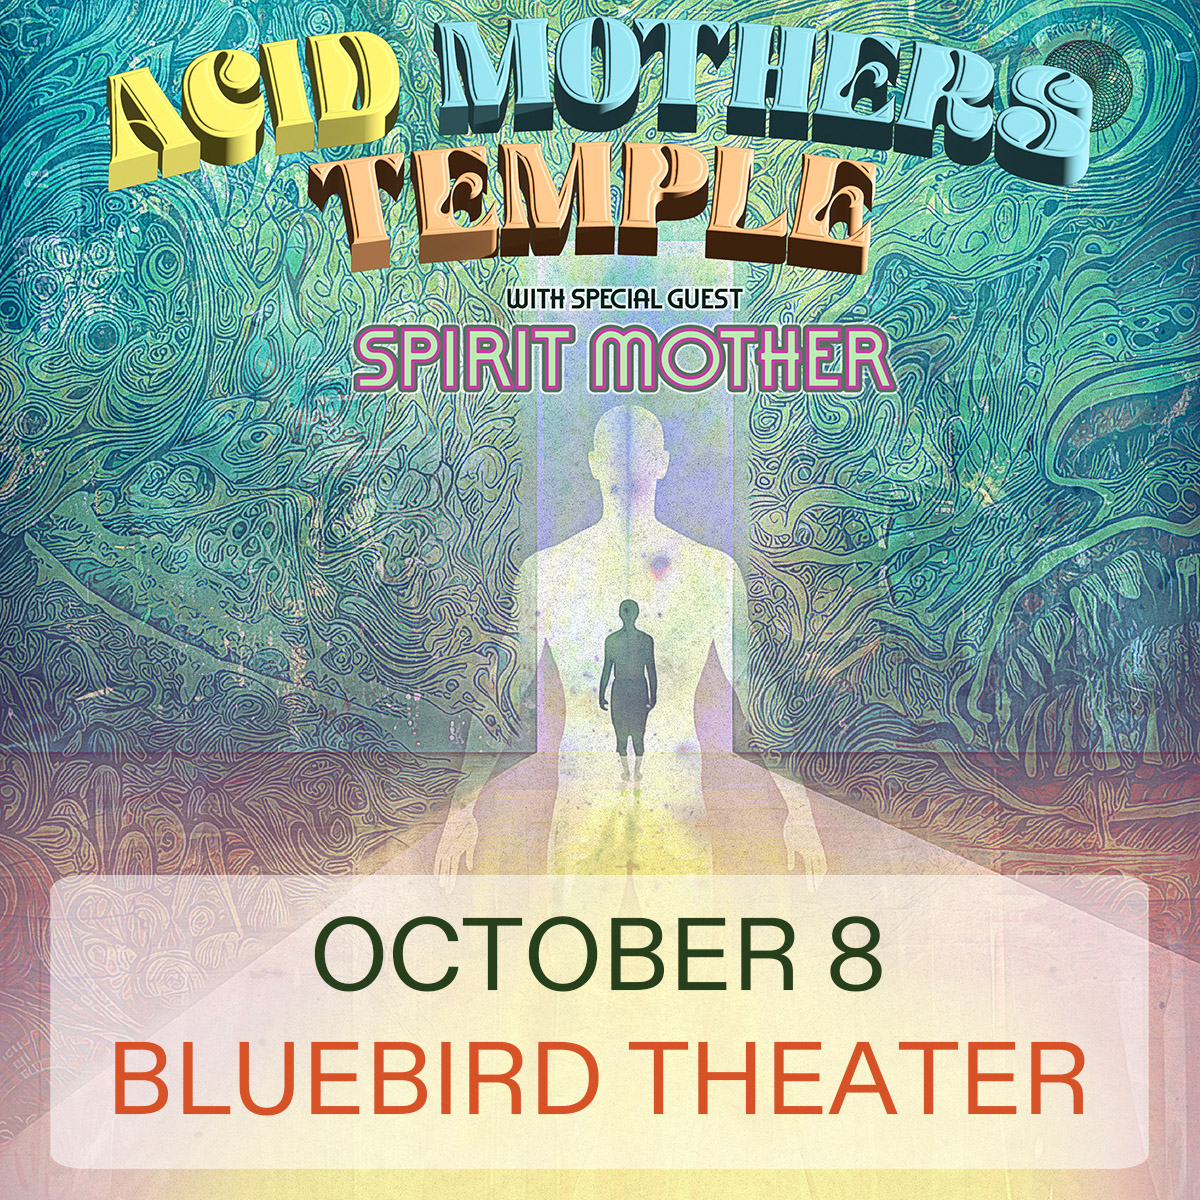 acid mothers temple presale happening today 10a - 10p 
PW: LEVITATION

🎟️
axs.com/artists/110471…